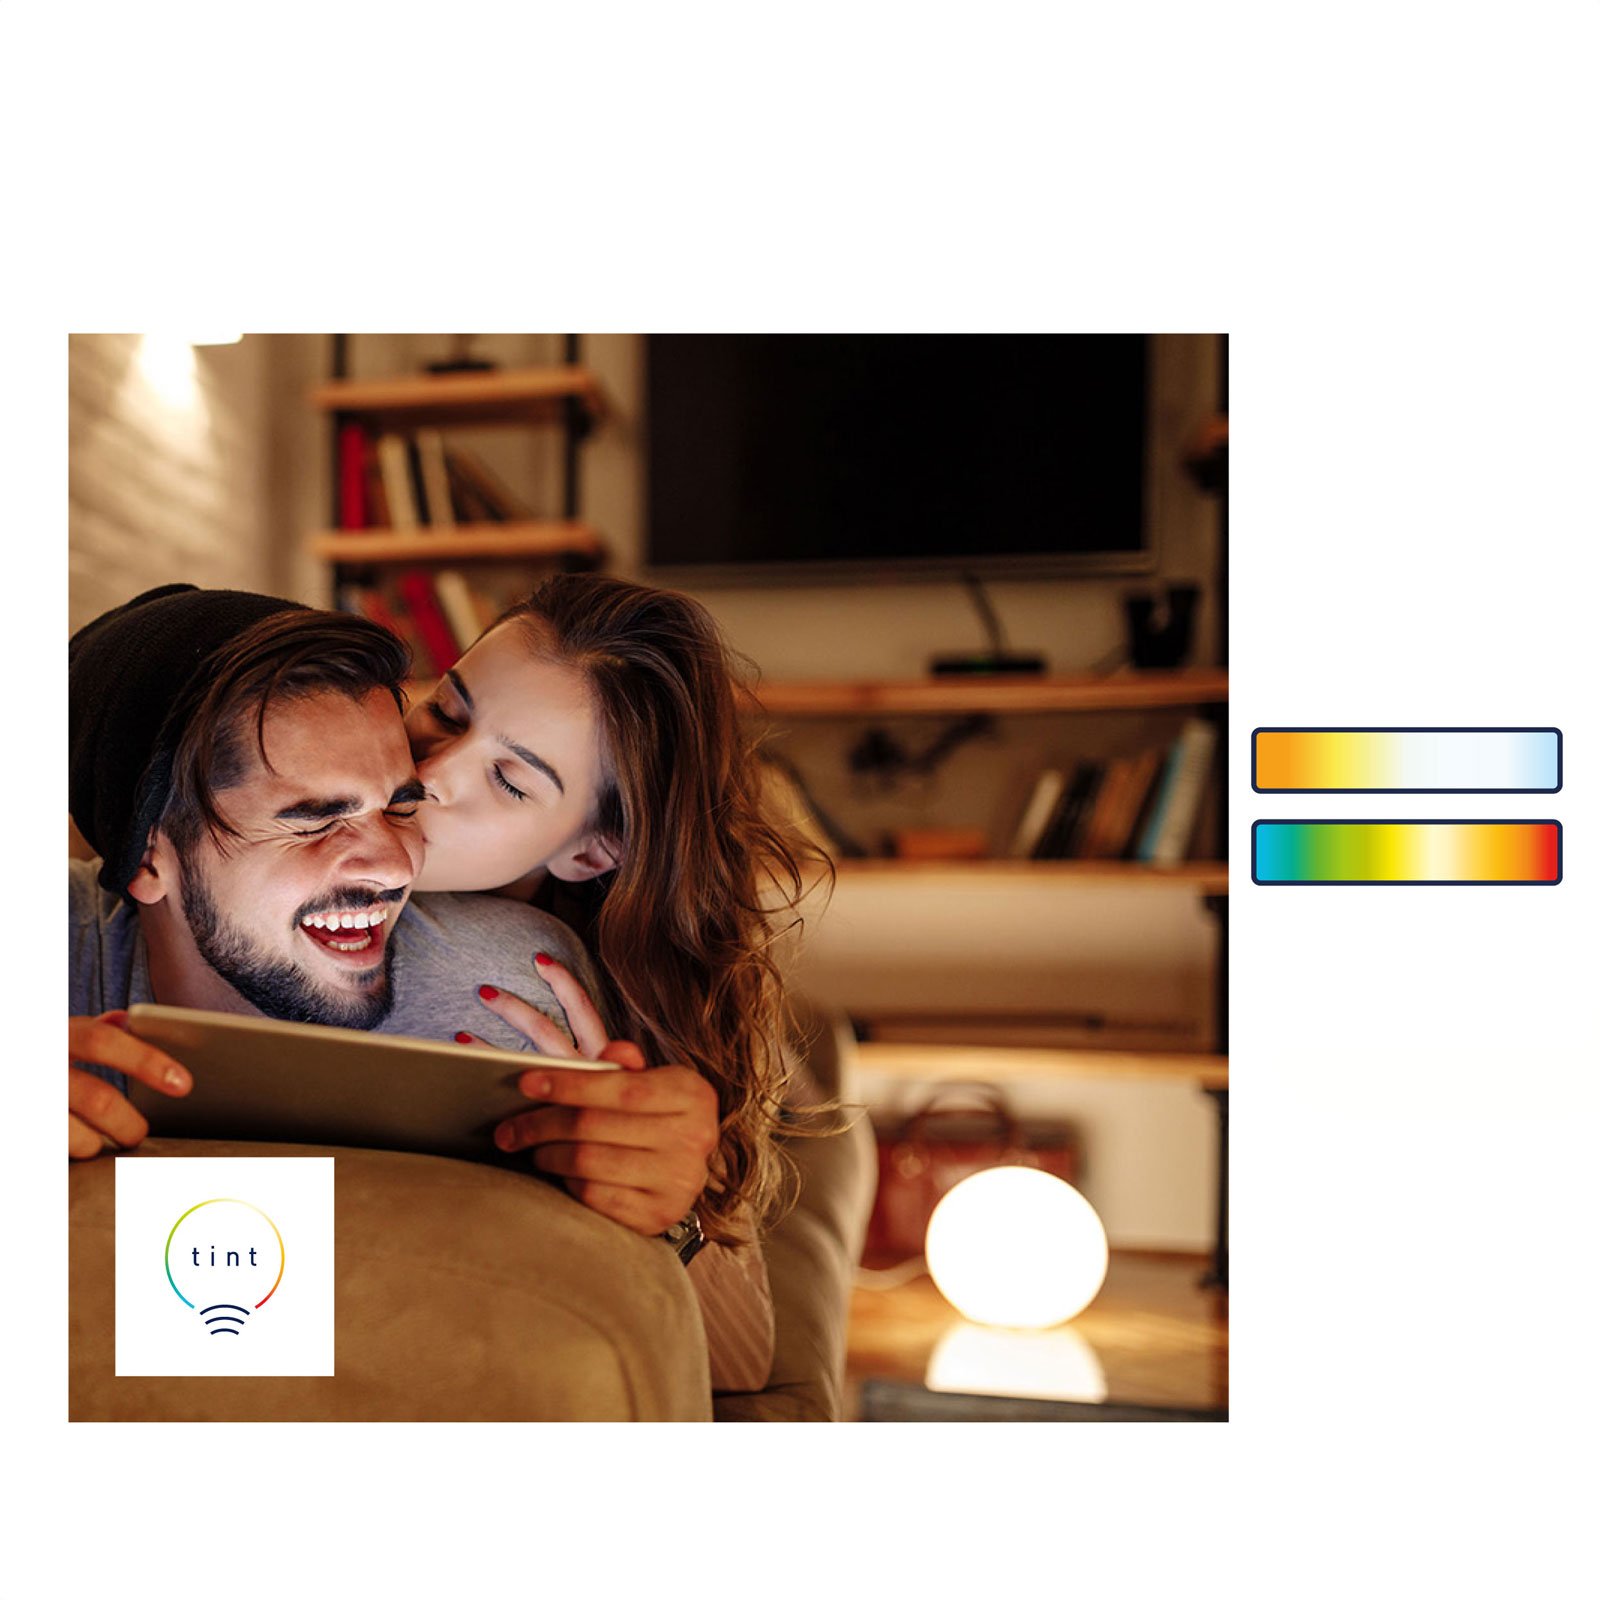 Müller Licht tint LED světelný pásek Talpa